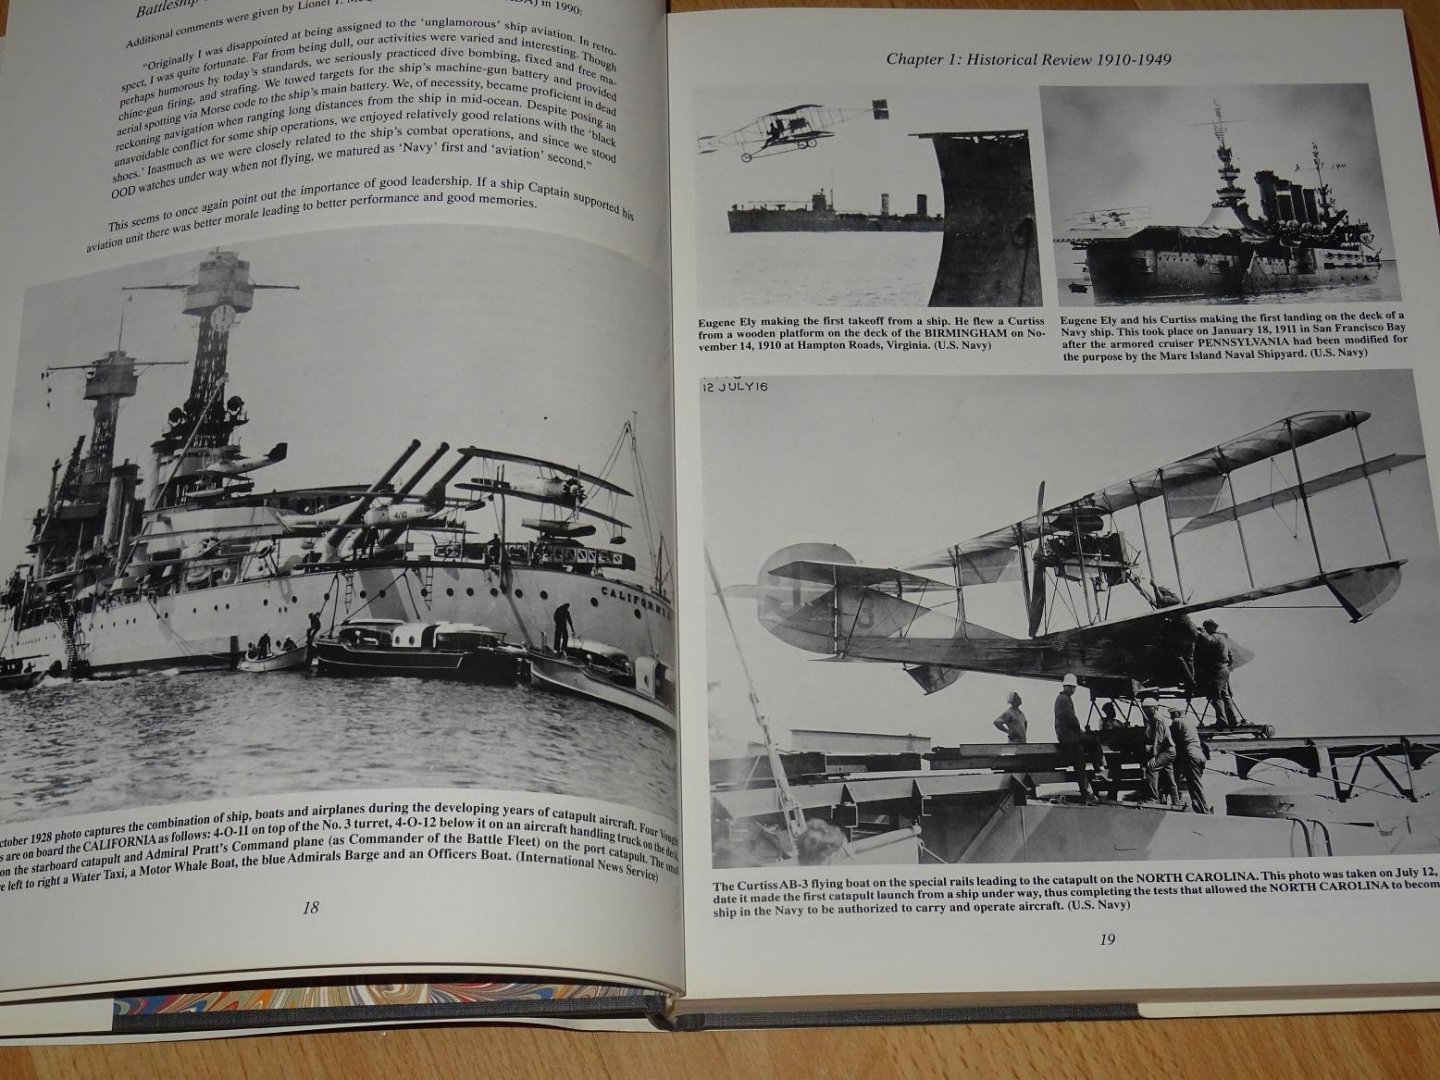 Larkins, William T. - Battleships & Cruiser Aircraft of the United States Navy 1910 - 1949